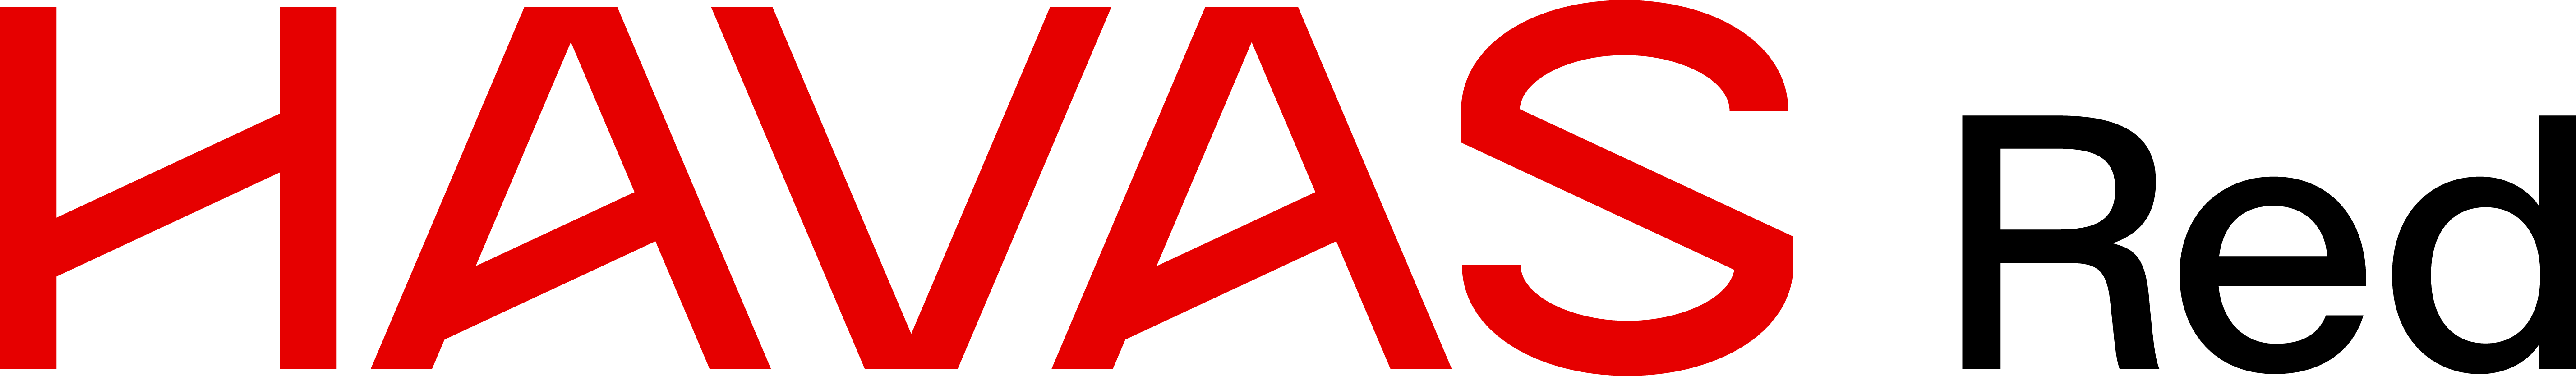 Avis Budget Group retains Havas Red and Havas Media Network